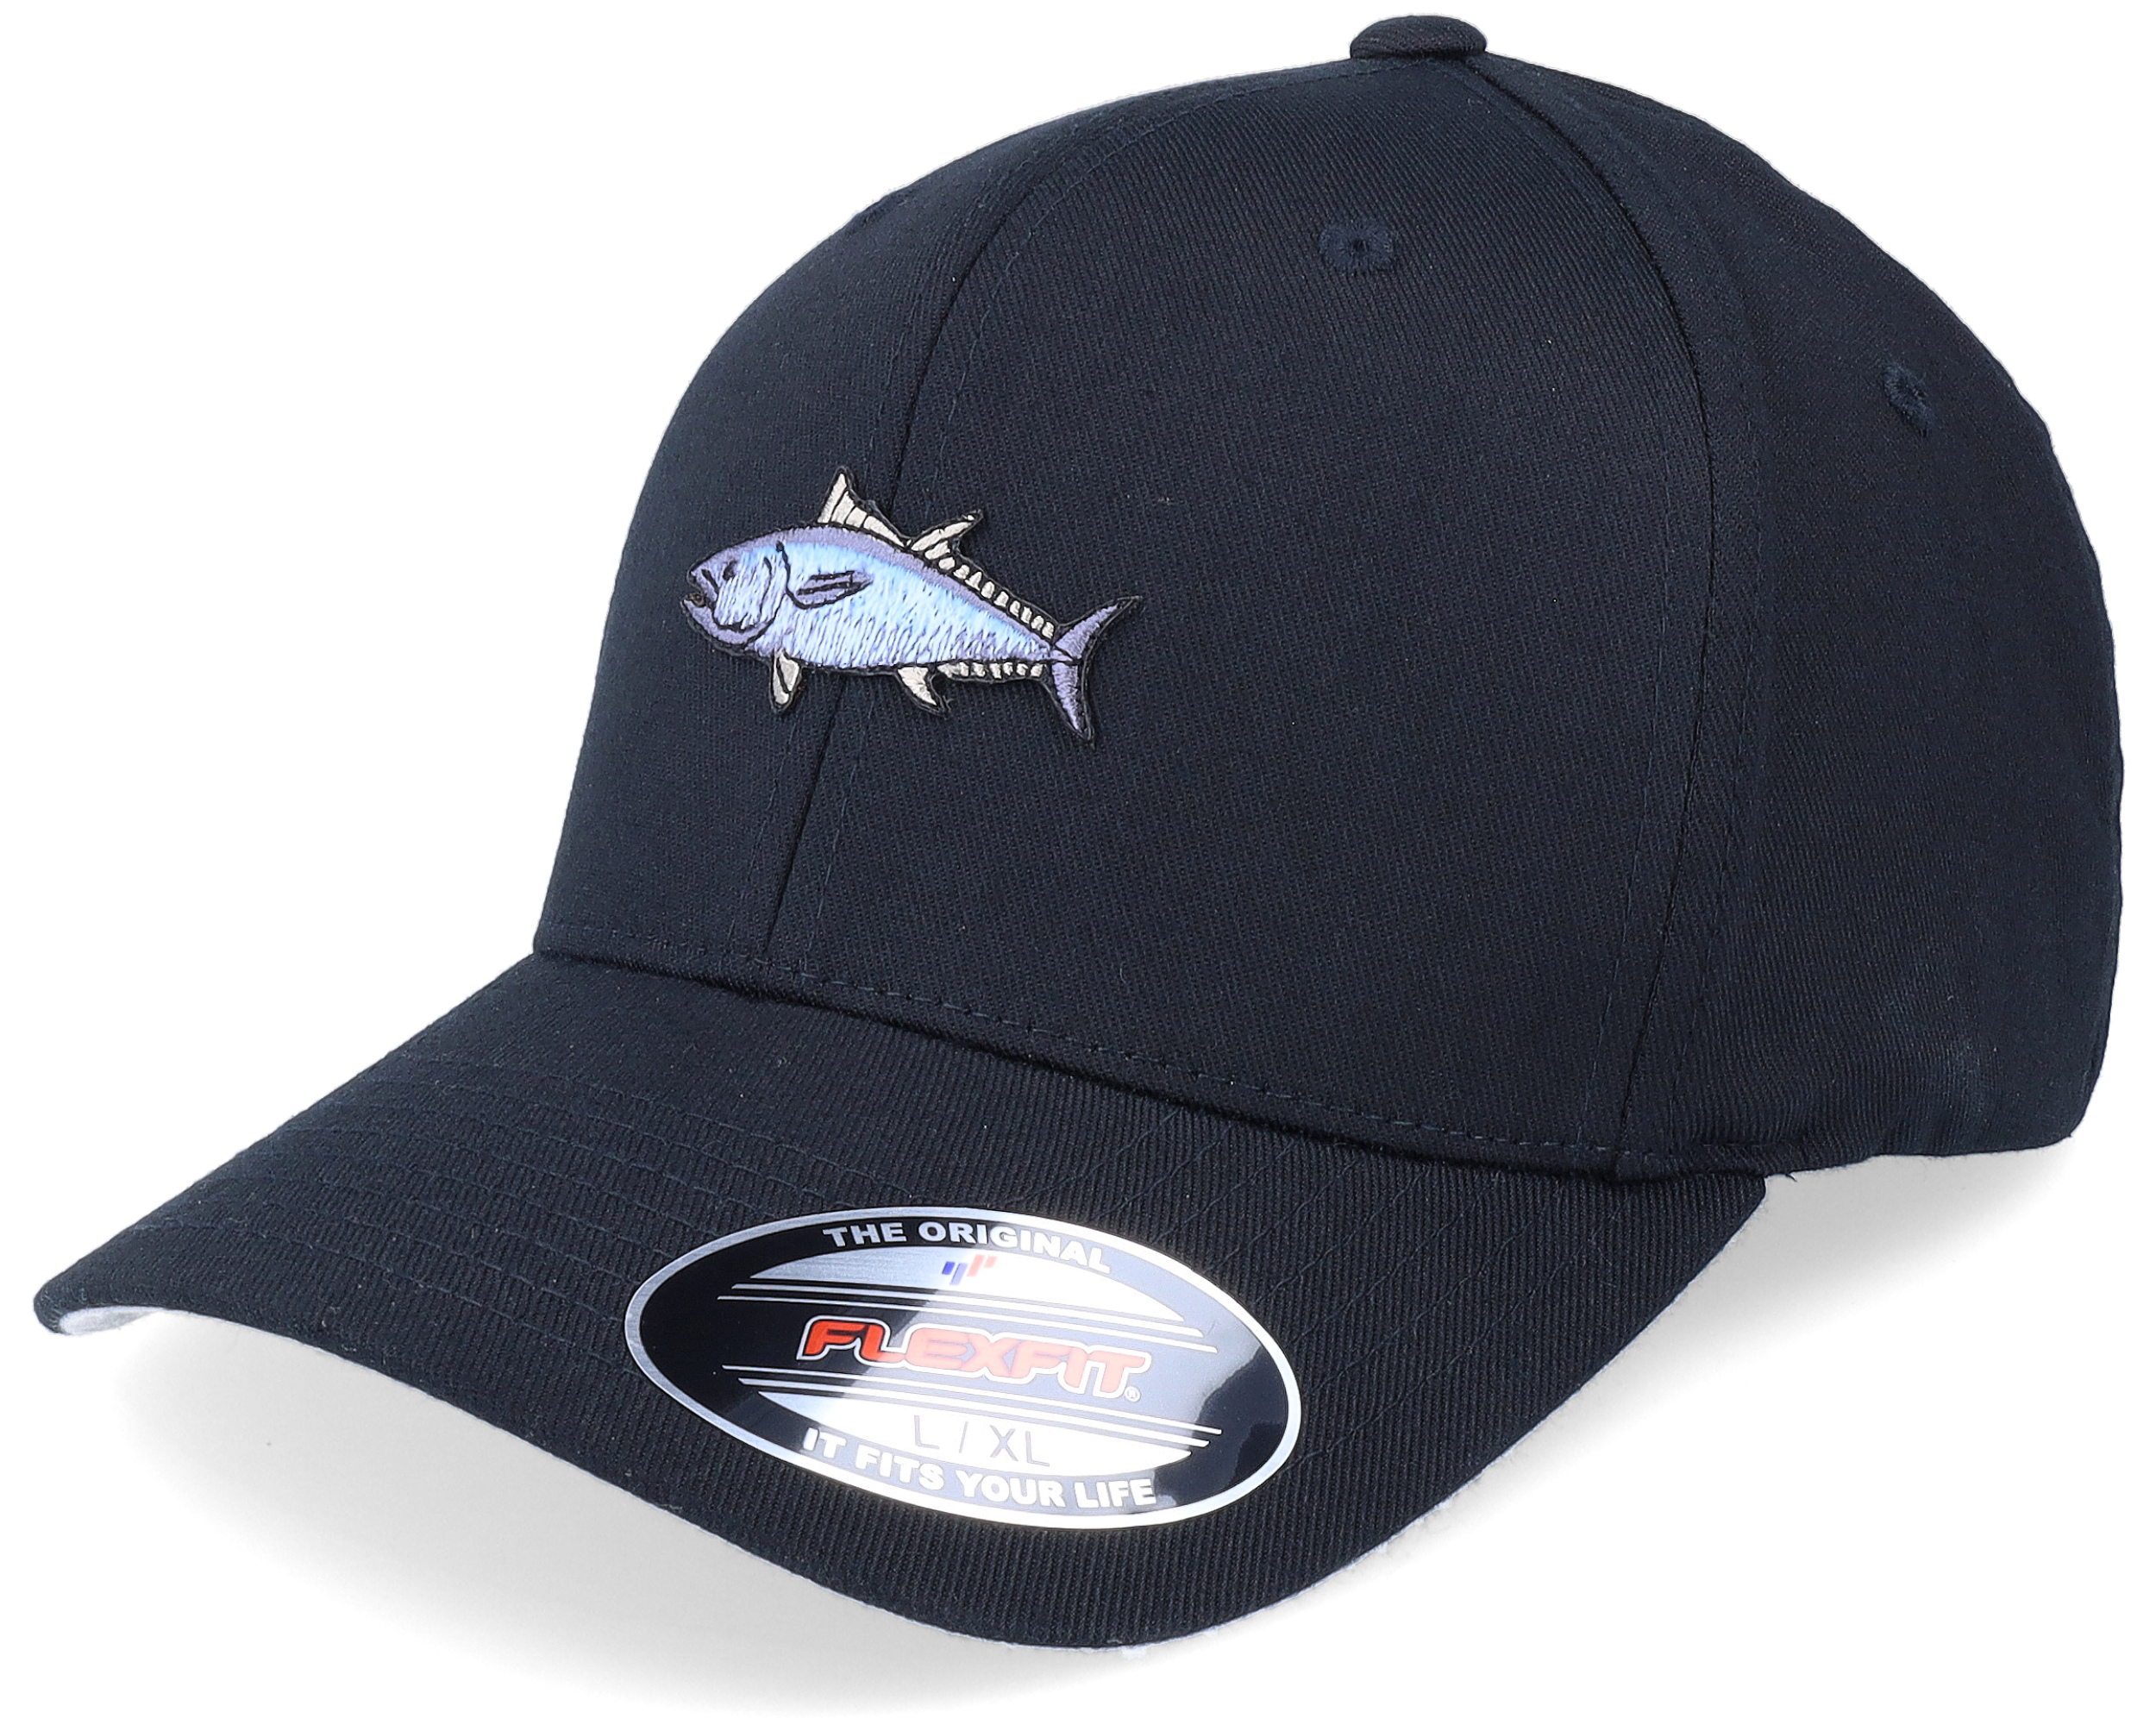 Skillfish - Black Flexfit Cap - Blue Fin Tuna Fish Black Flexfit @ Hatstore